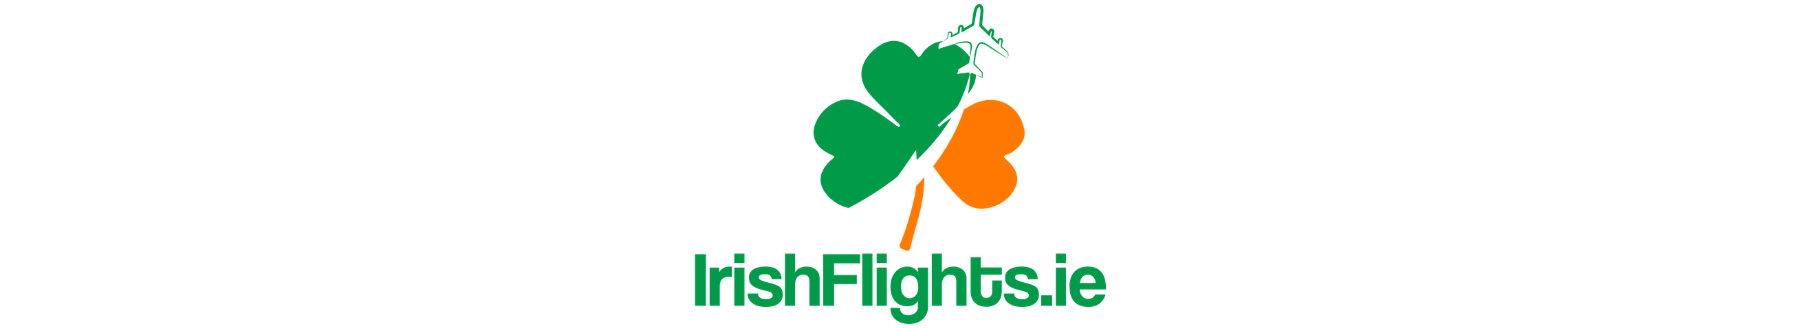 IrishFlights.ie